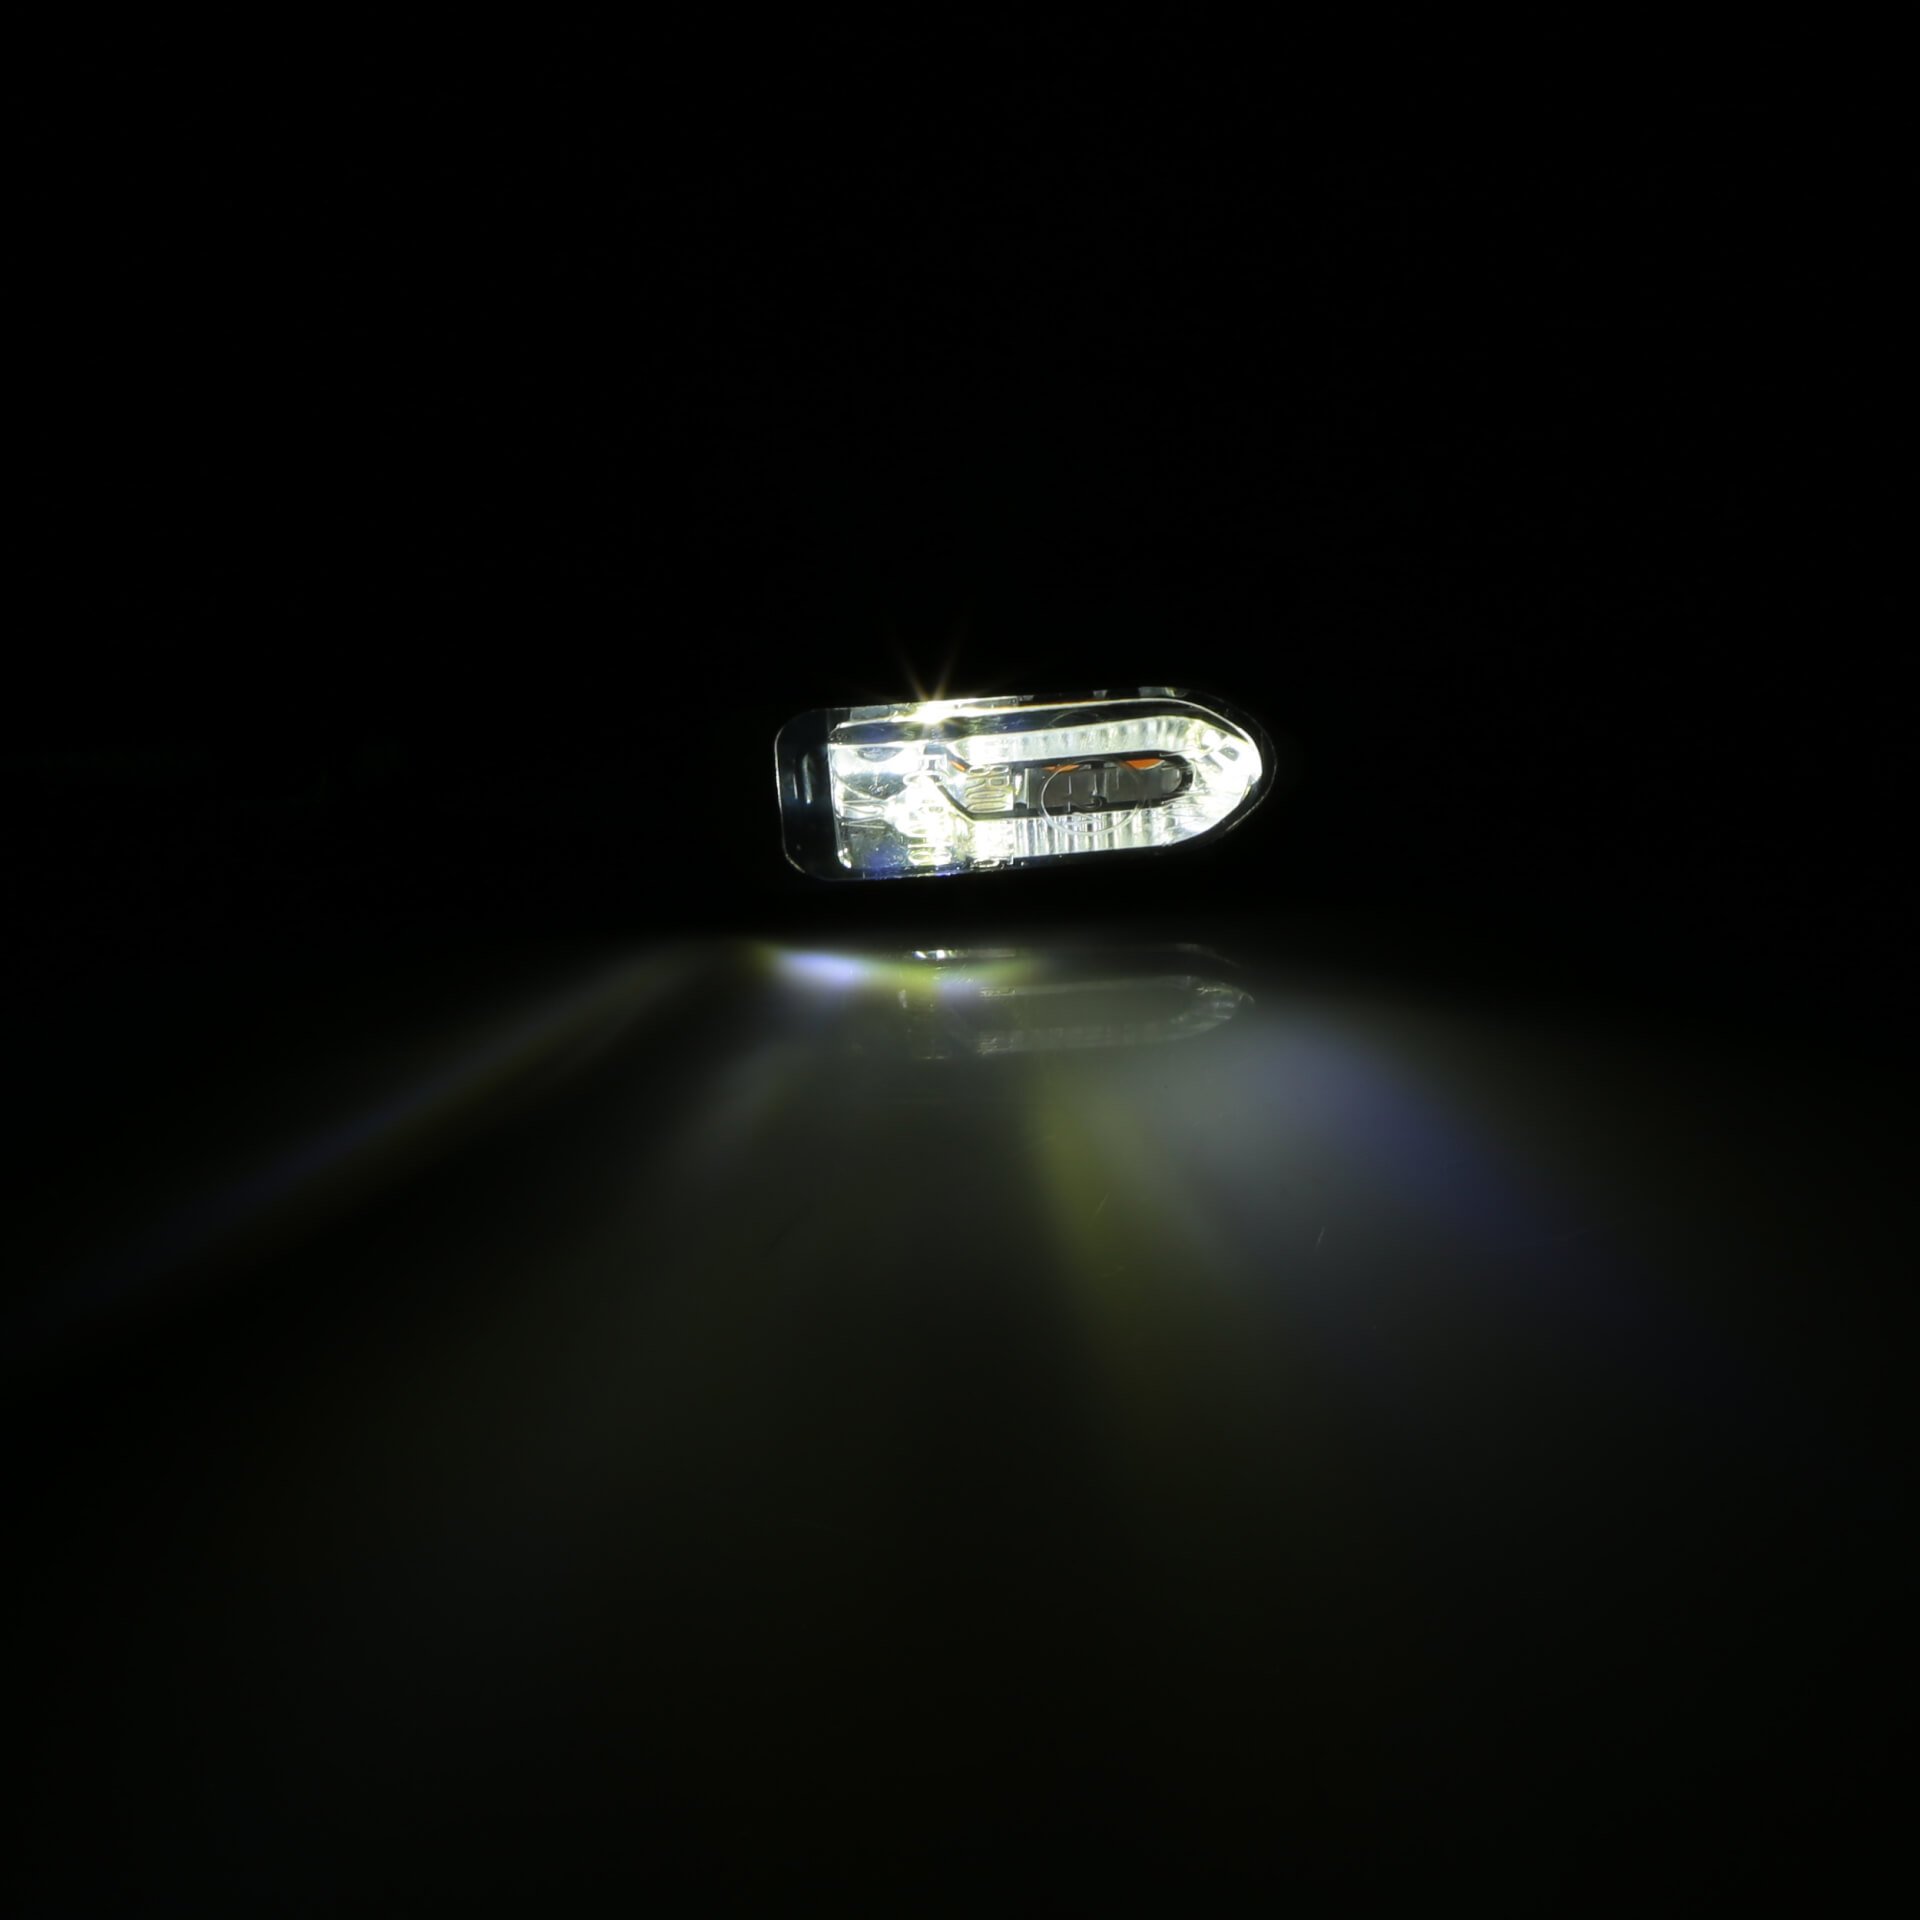 shin_yo NAMIKO-TS LED blinker / position light